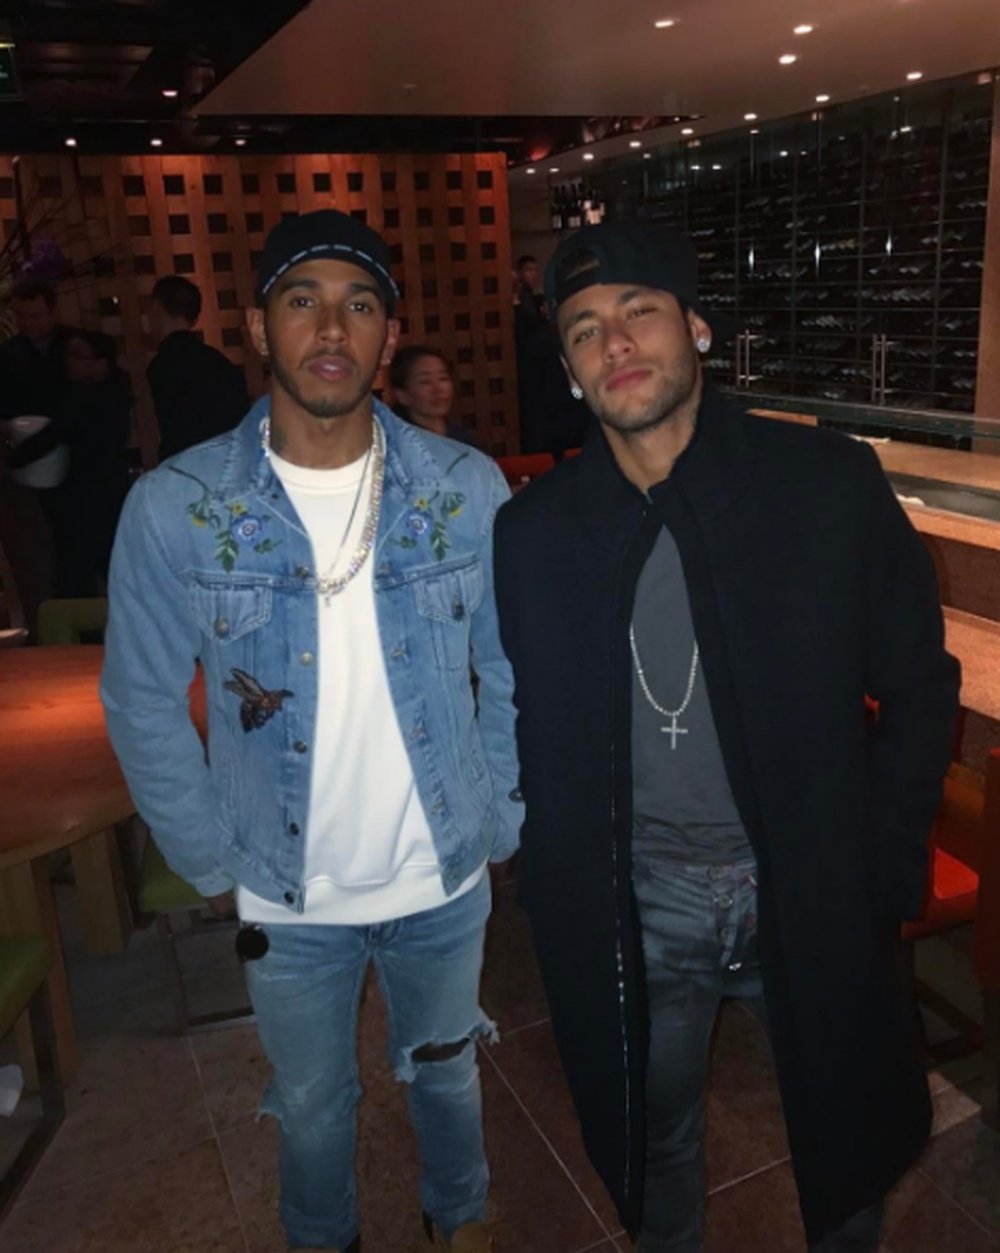 Neymar and Lewis Hamilton posing together. Neymarjr